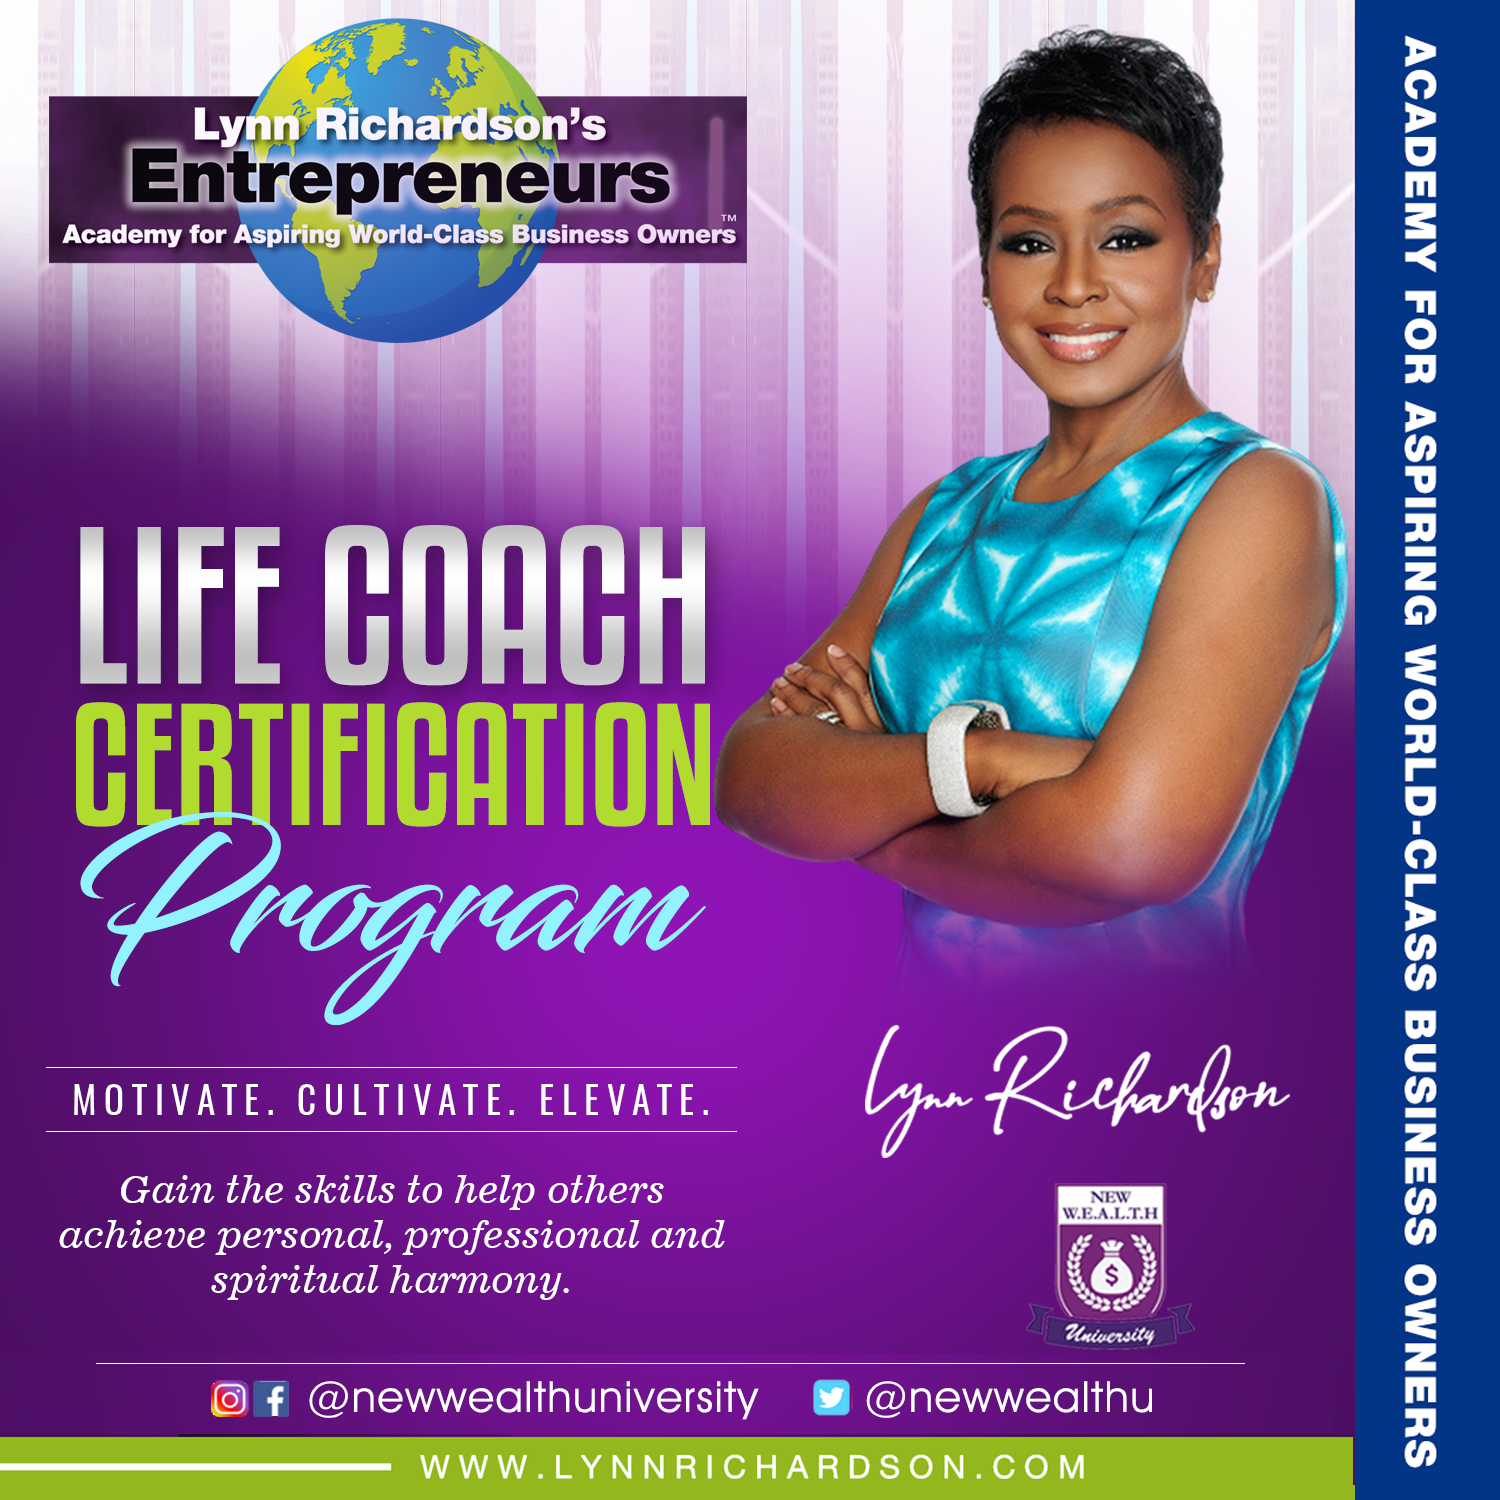 Lynn Richardson's Life Coach Certification Program